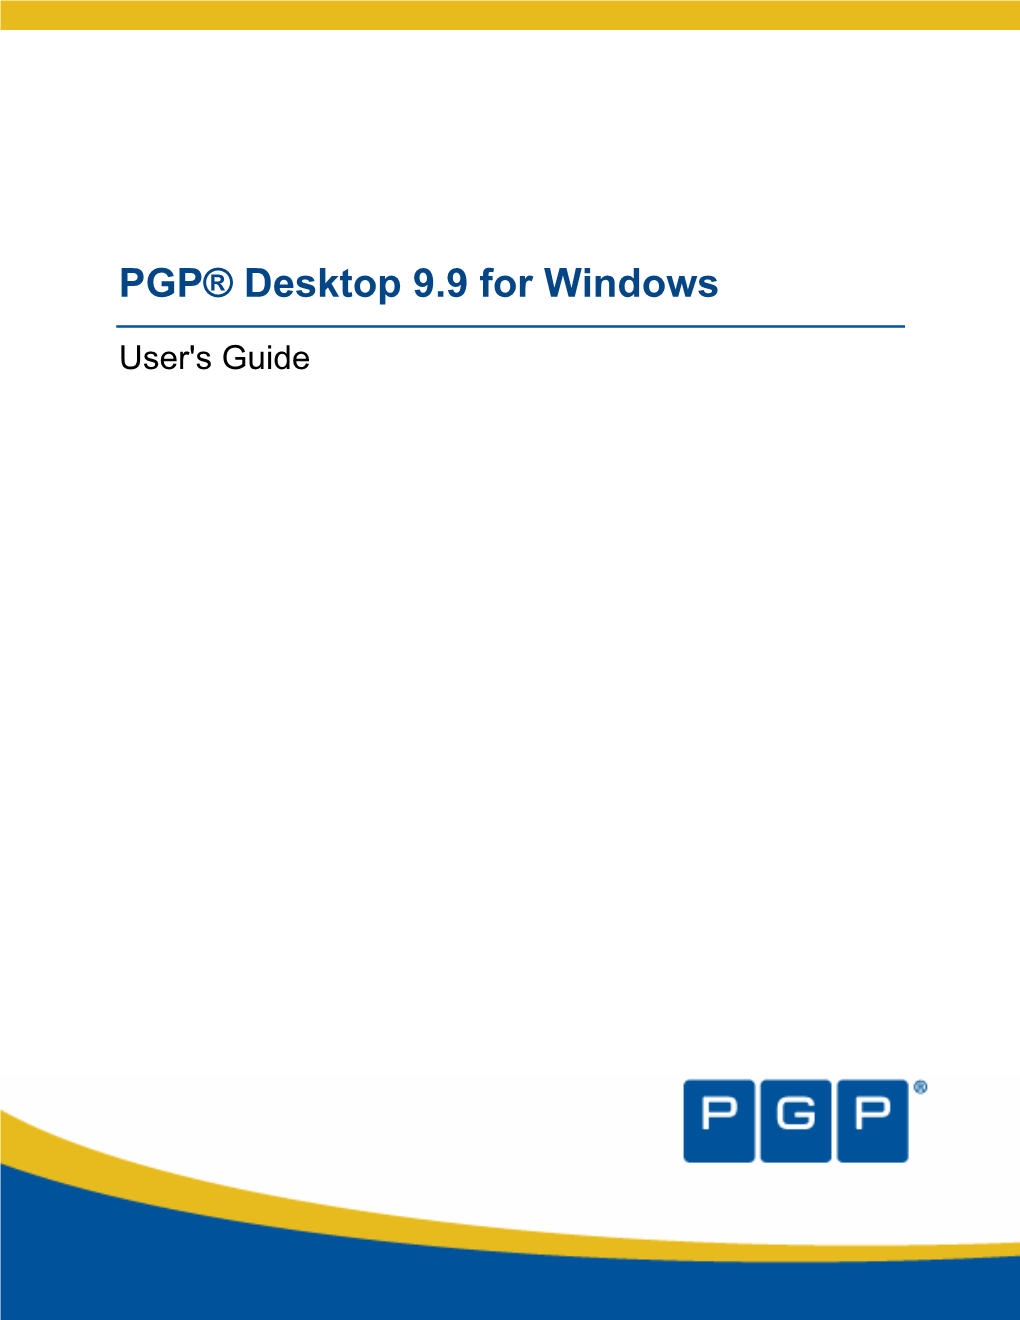 PGP® Desktop 9.9 for Windows User's Guide